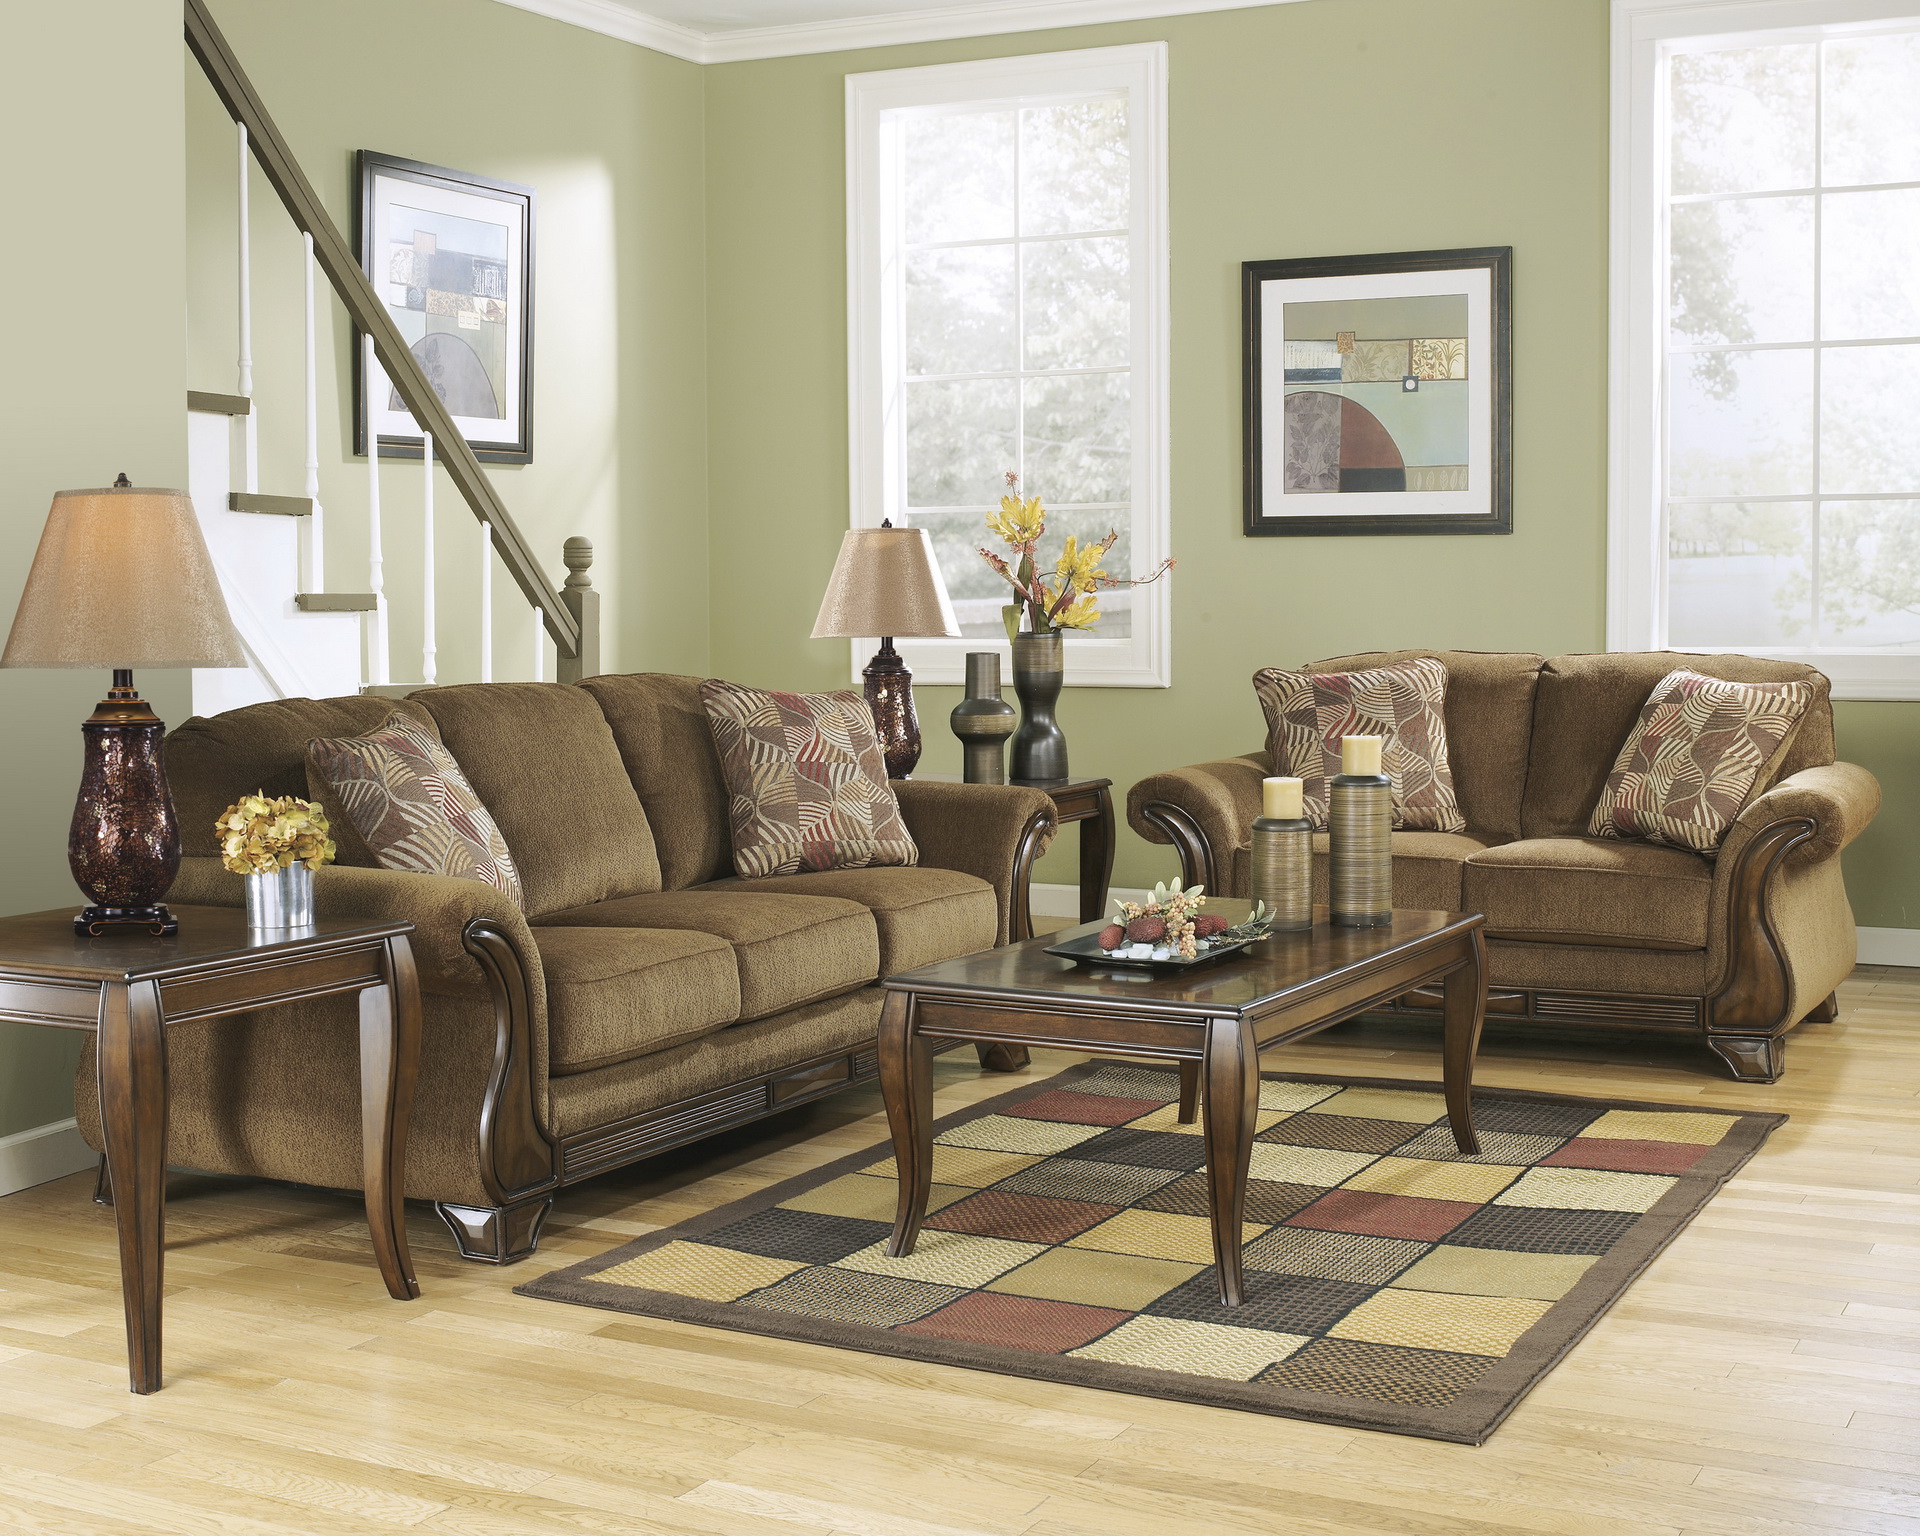 do furniture for living room